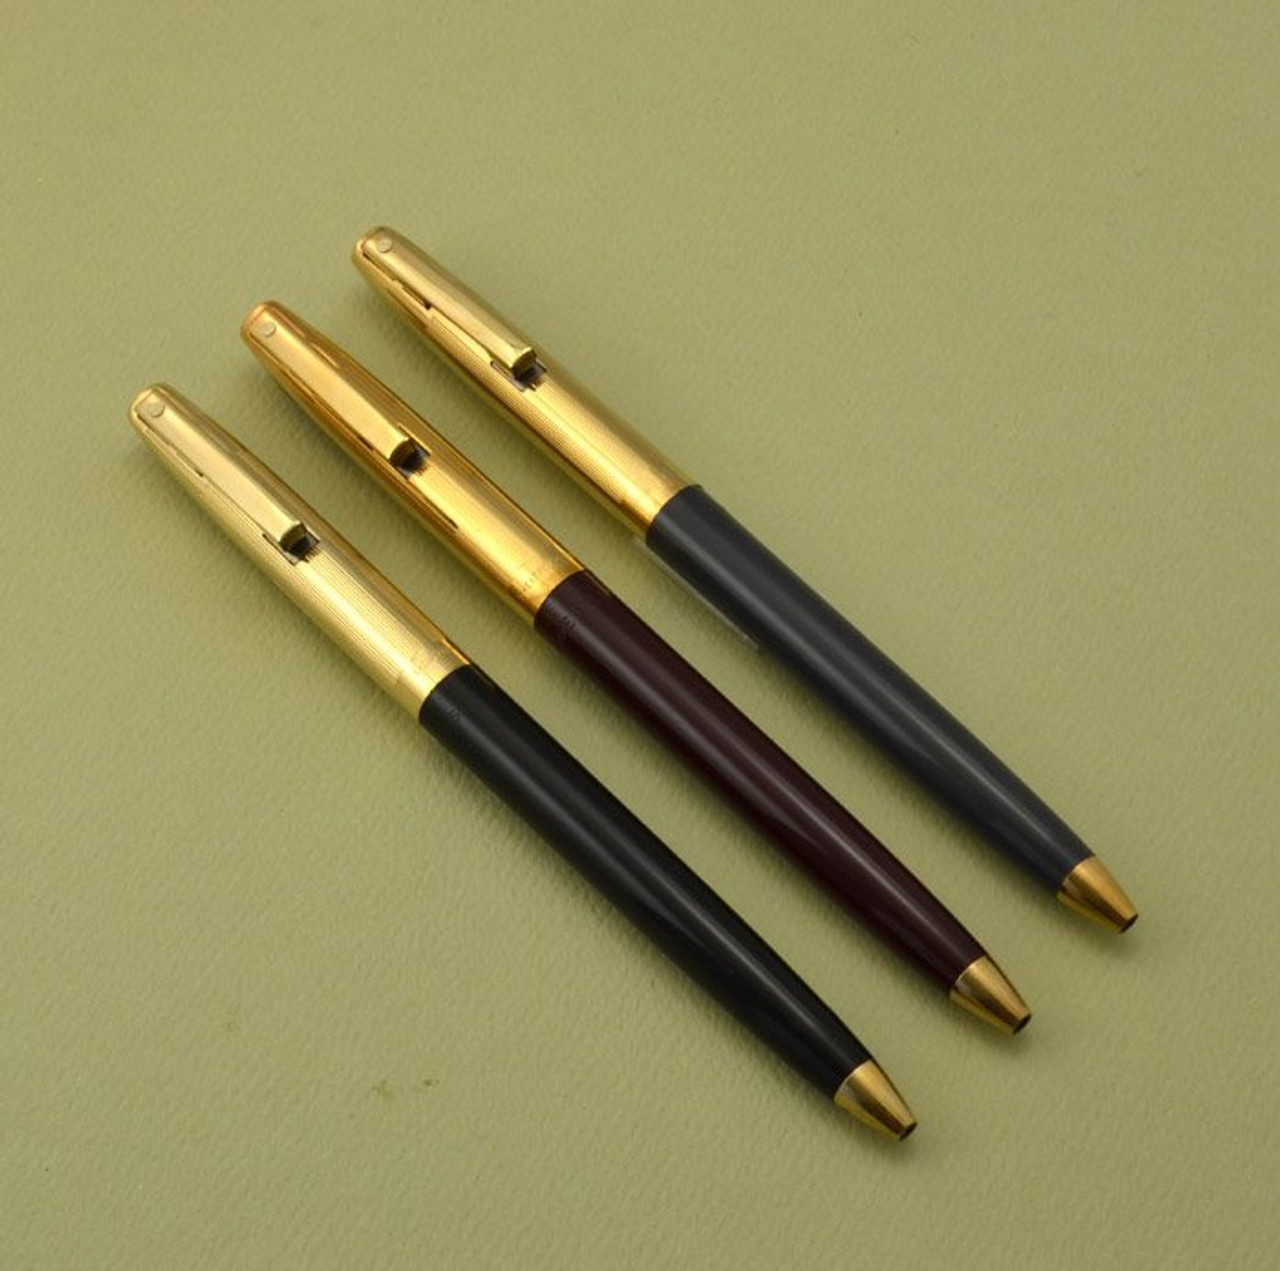 Sheaffer Imperial VIII Ballpoint Pen -  Gold Cap, Plastic Body, Reminder Clip (New Old Stock)